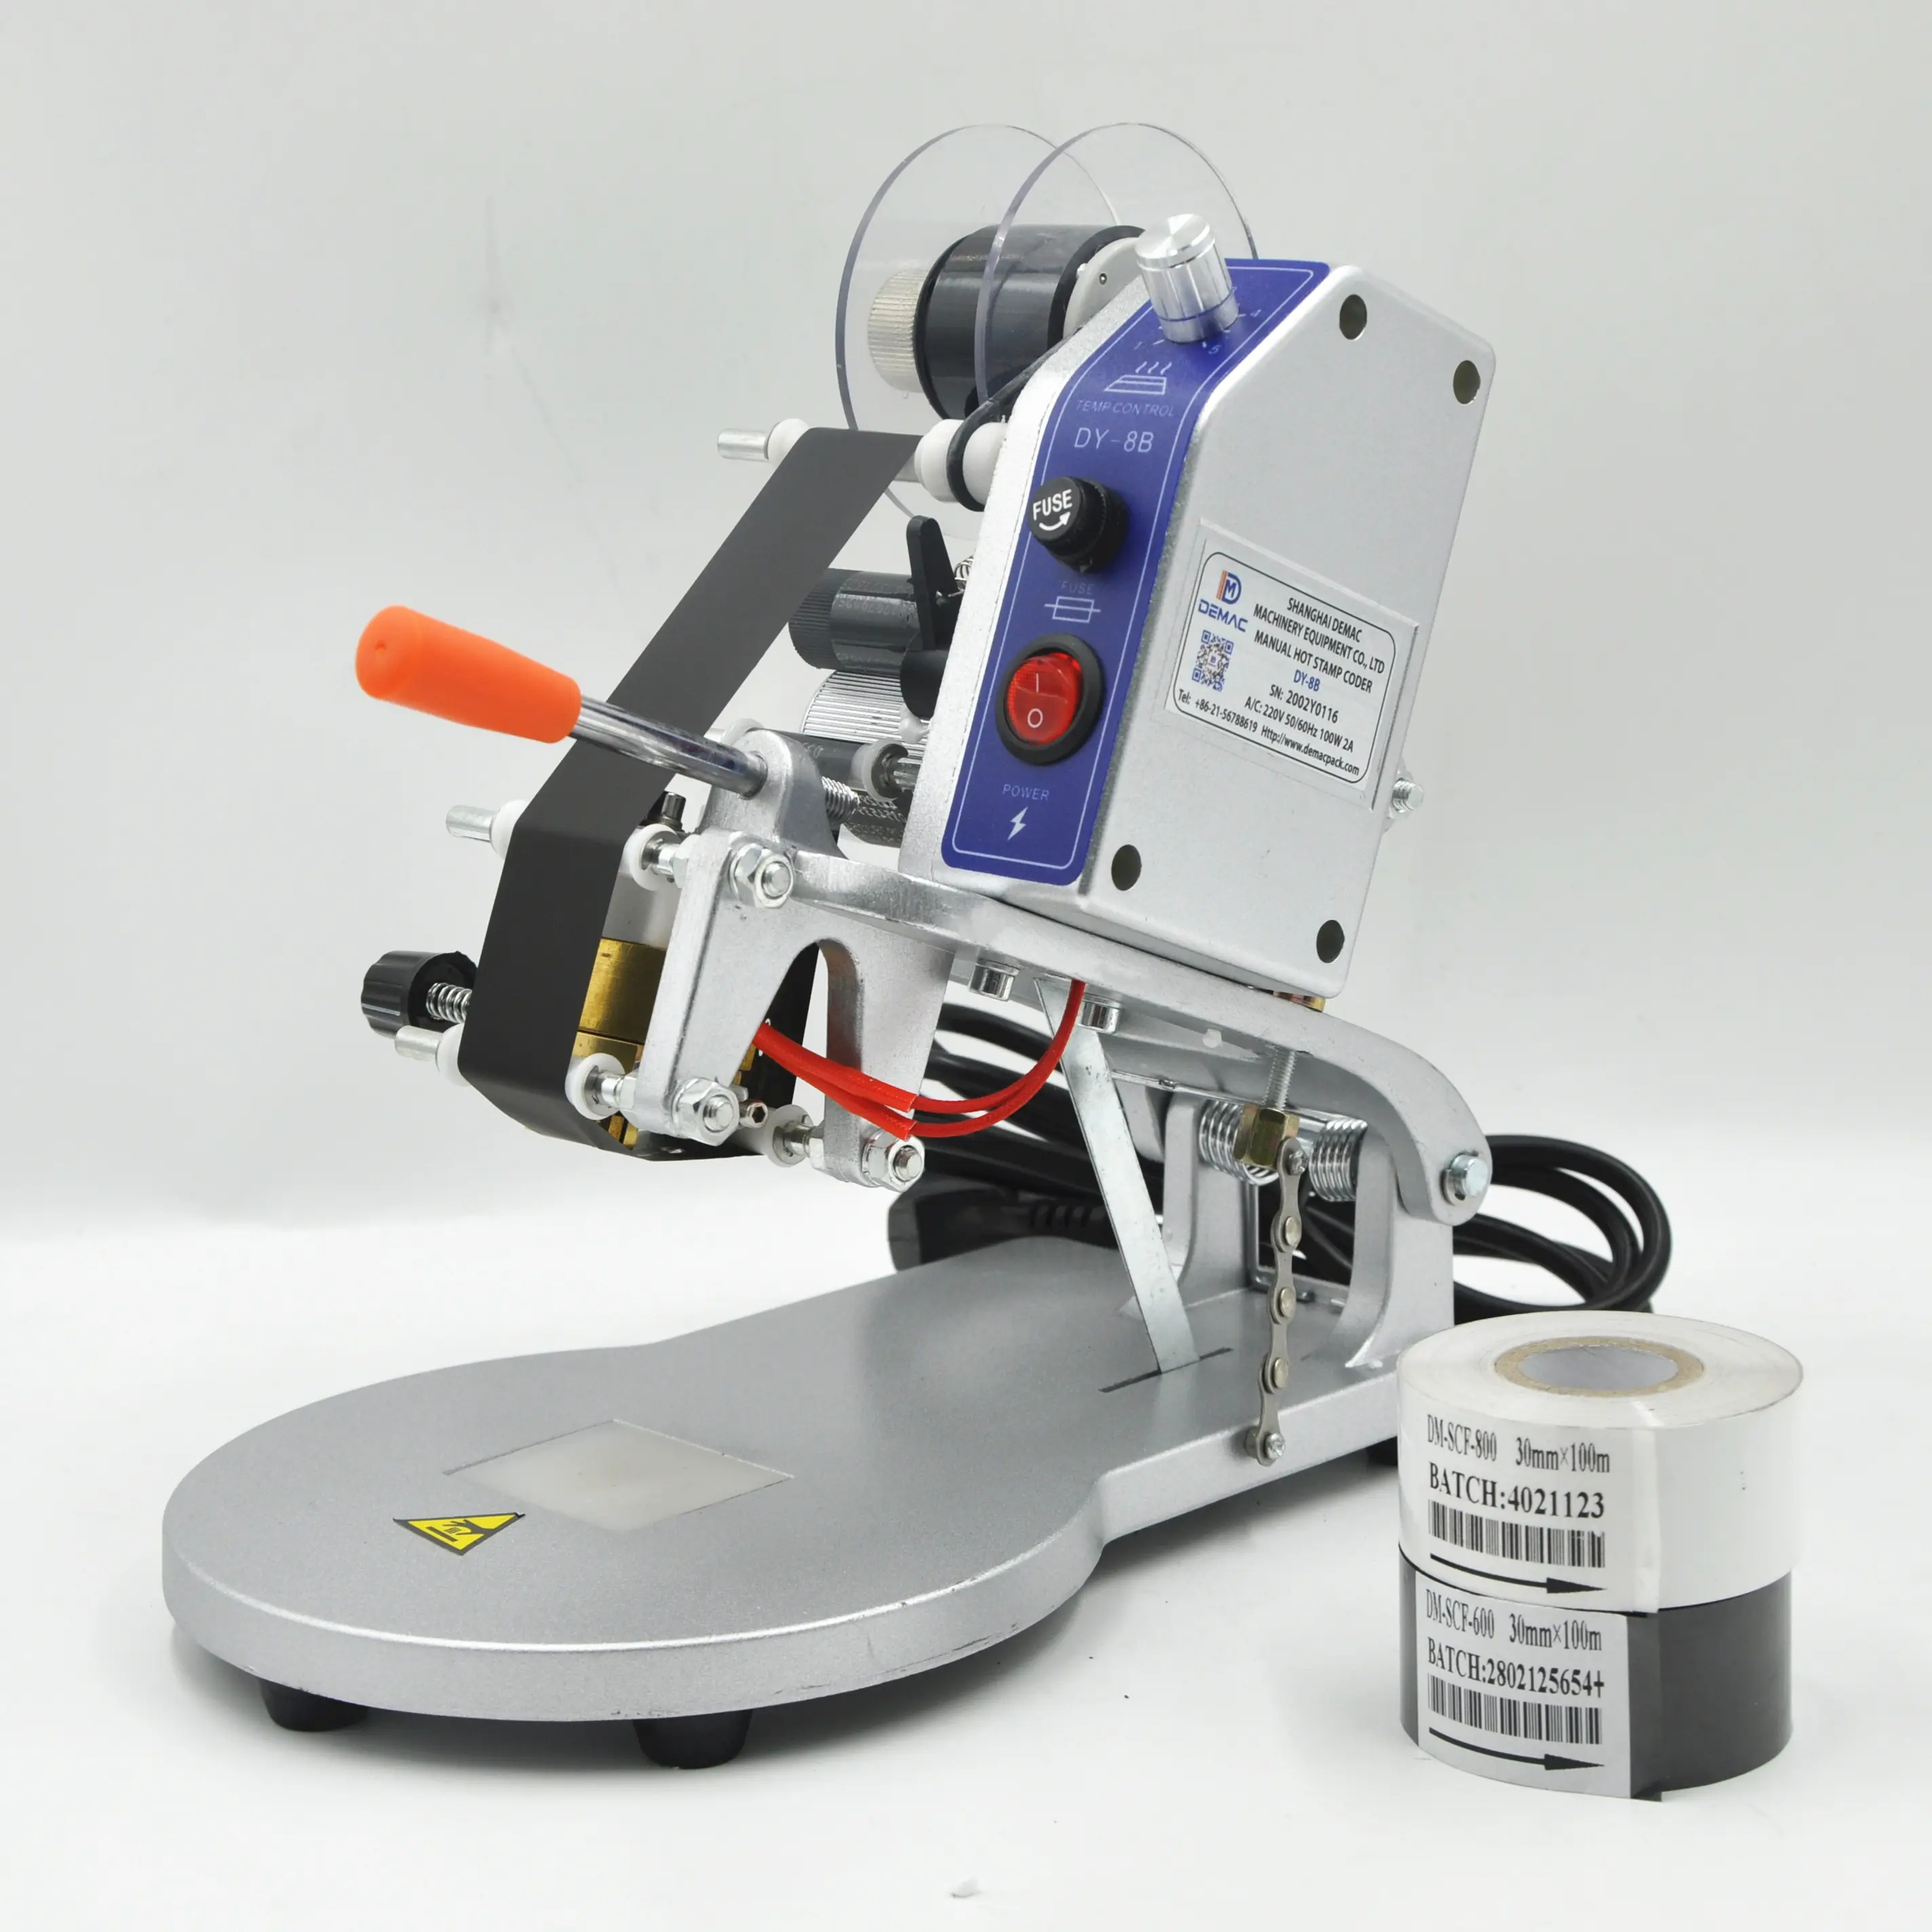 DY-8 Hot Stamp Printer Manual Ribbon Coding Hot Foil Stamping Date Code Machine 